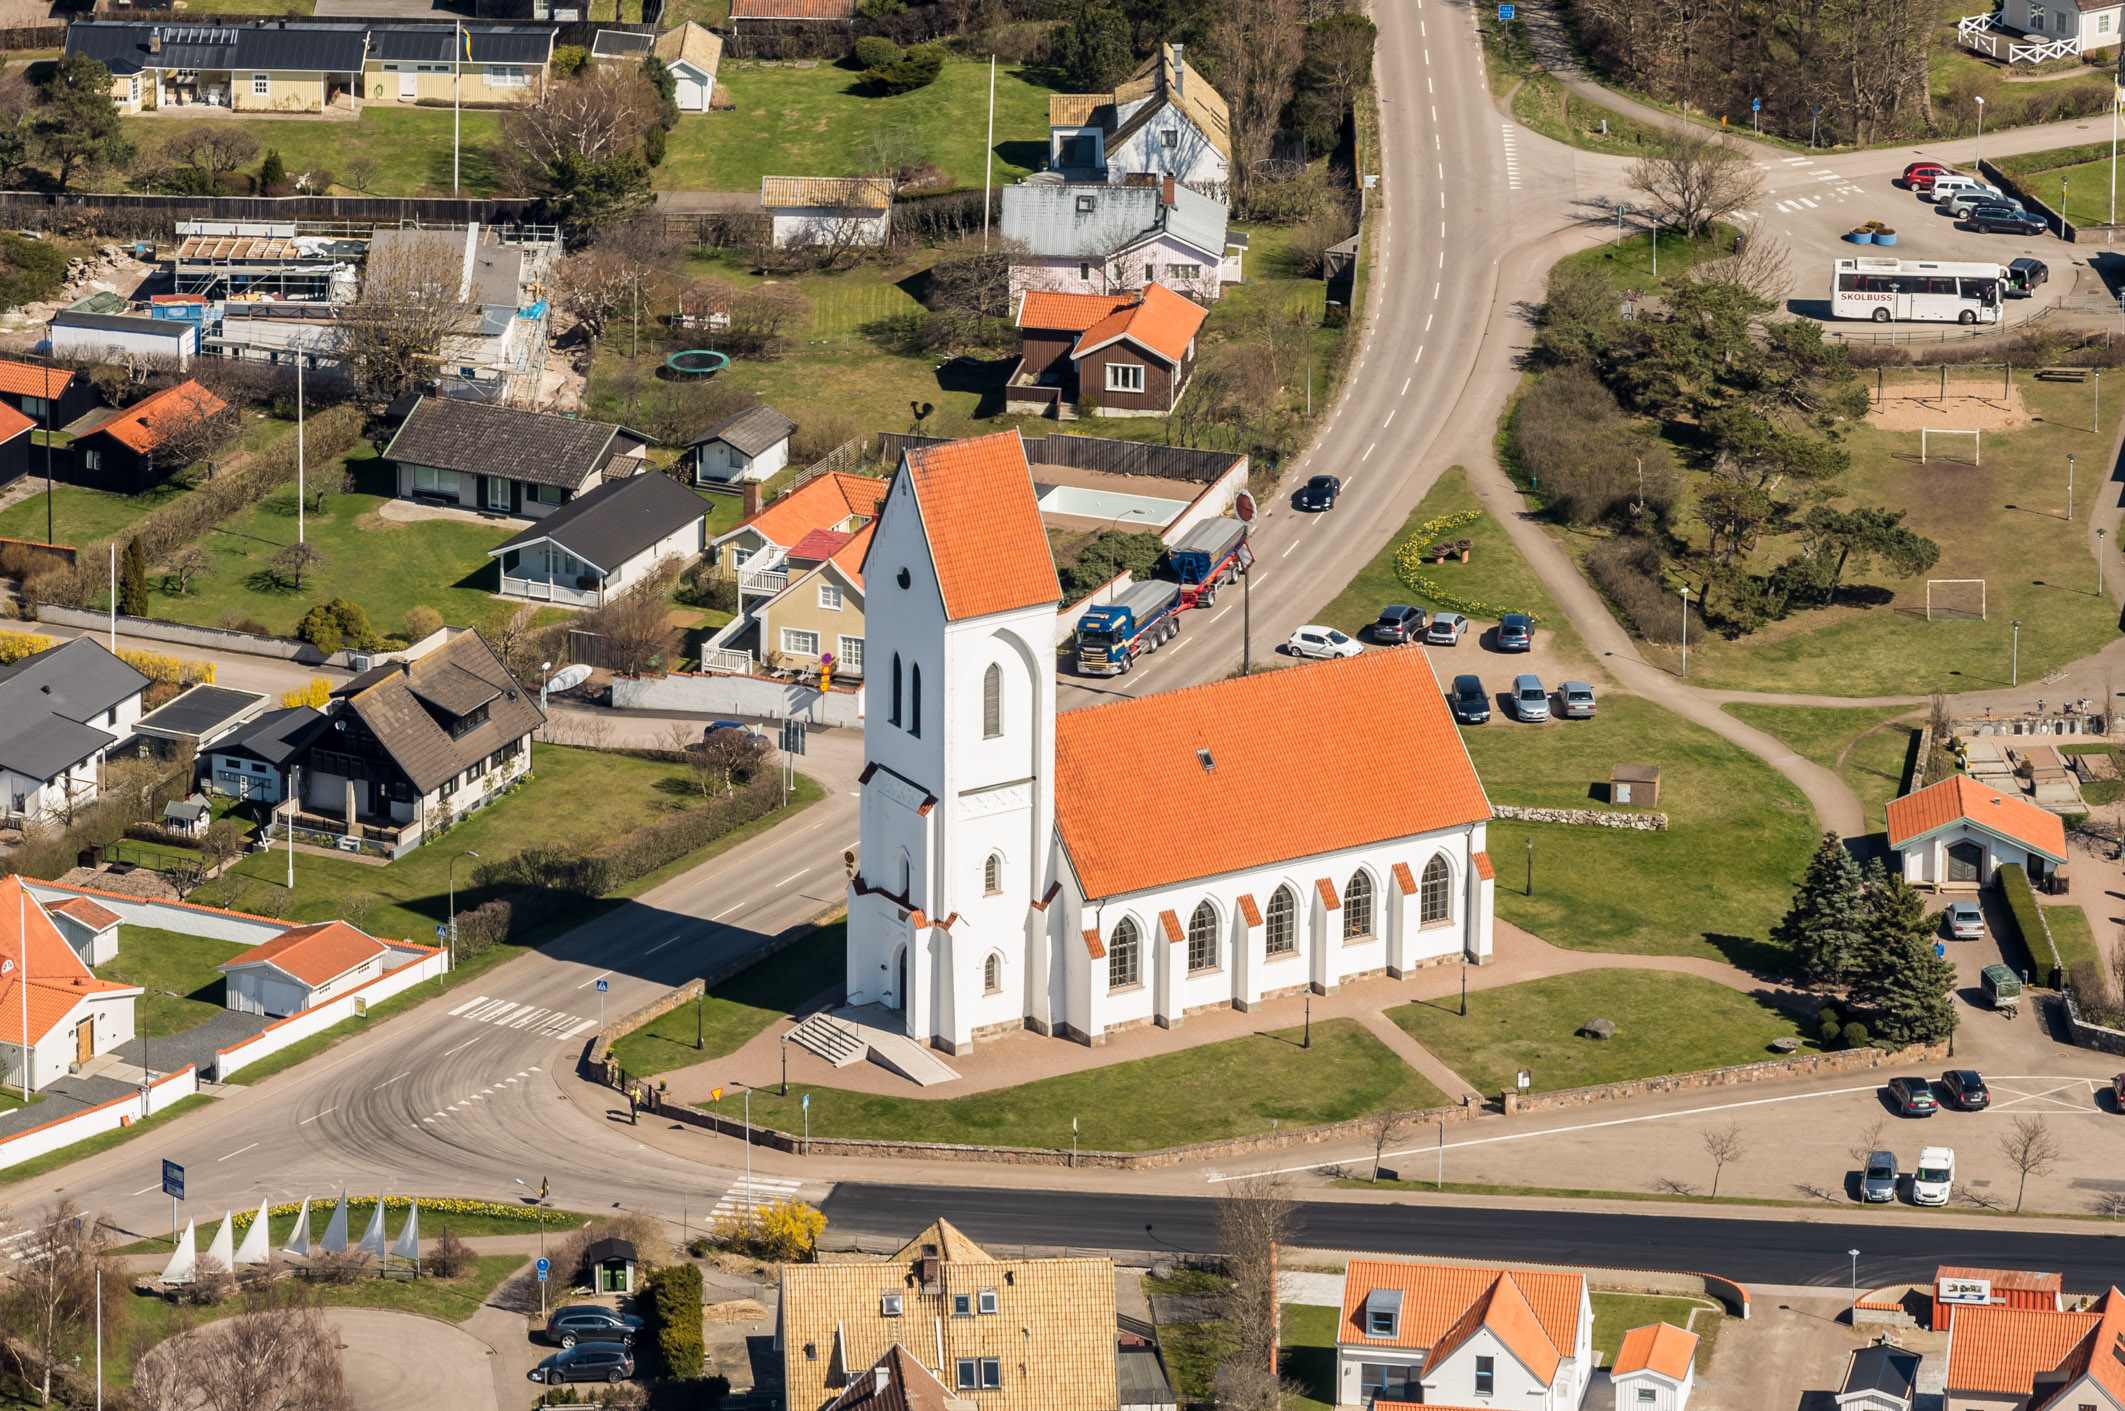 Torekovs kyrka